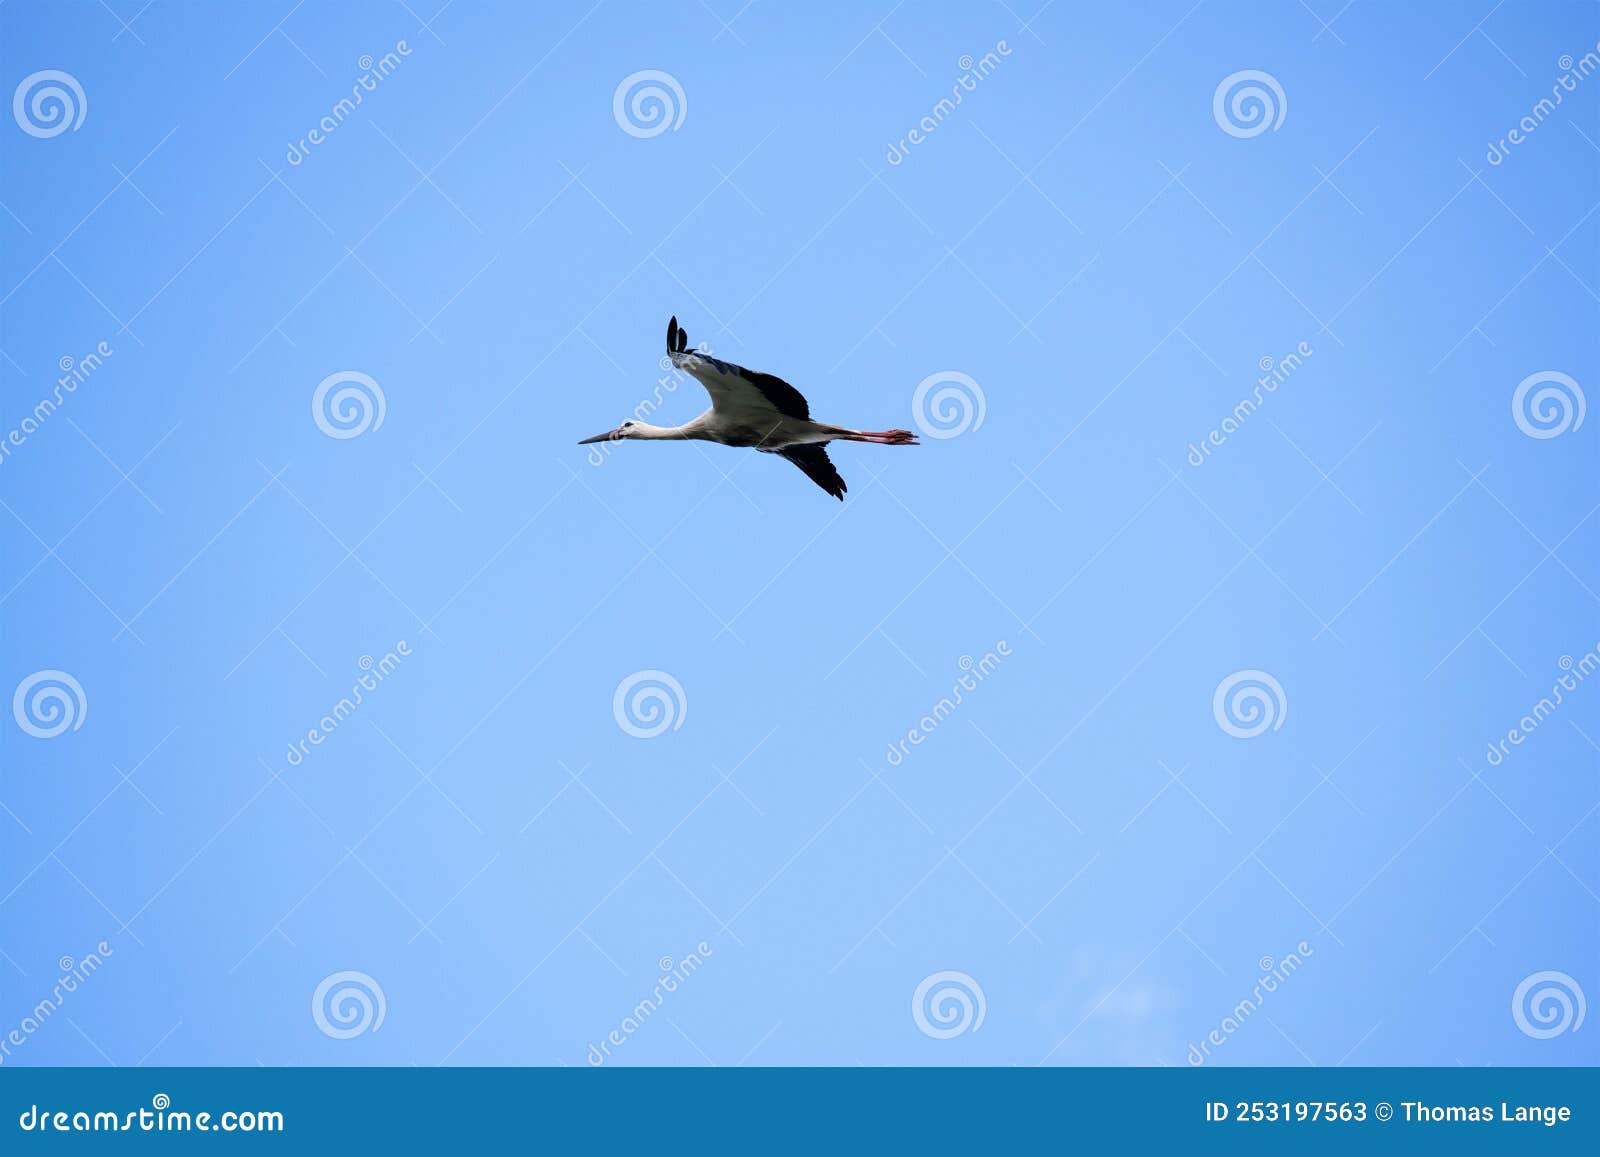 a flying stork against a blue sky